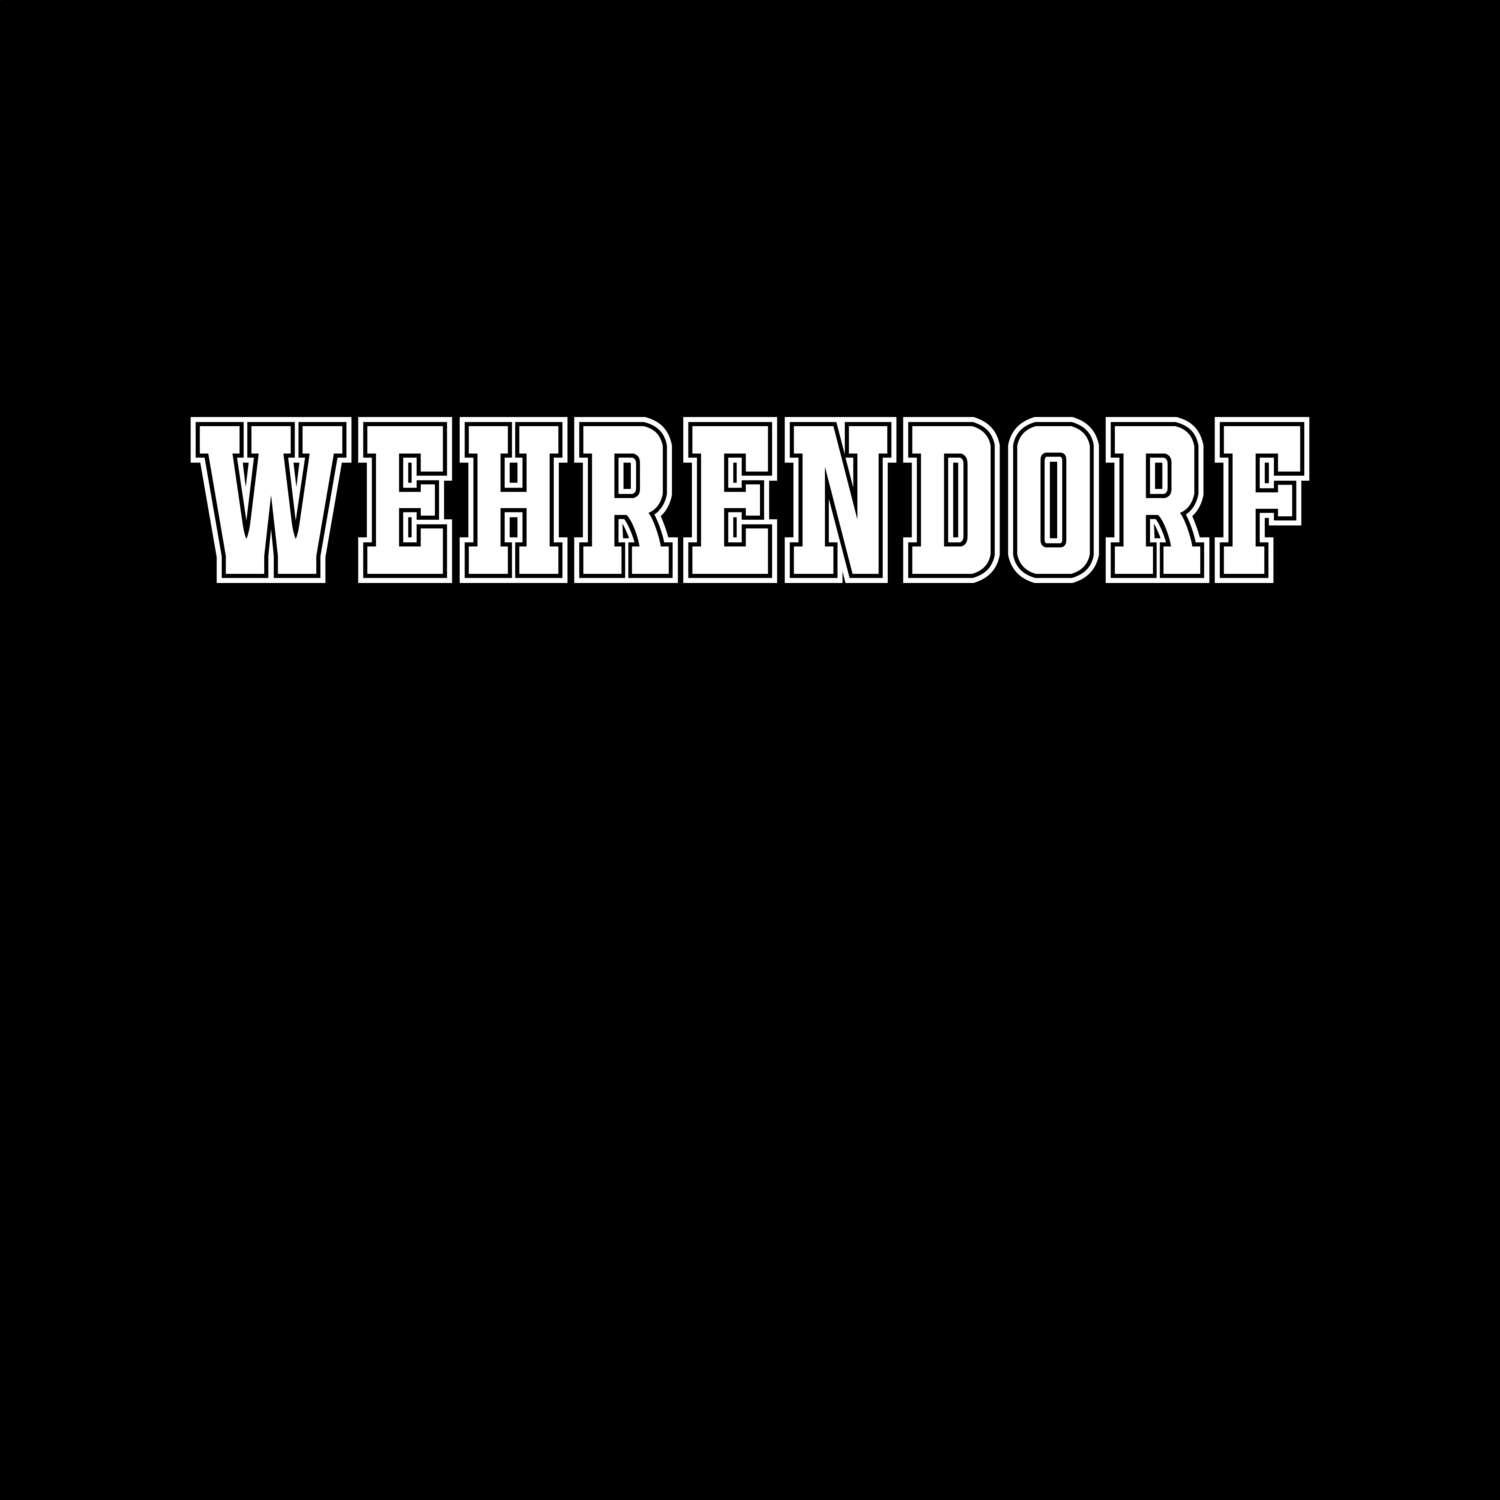 Wehrendorf T-Shirt »Classic«